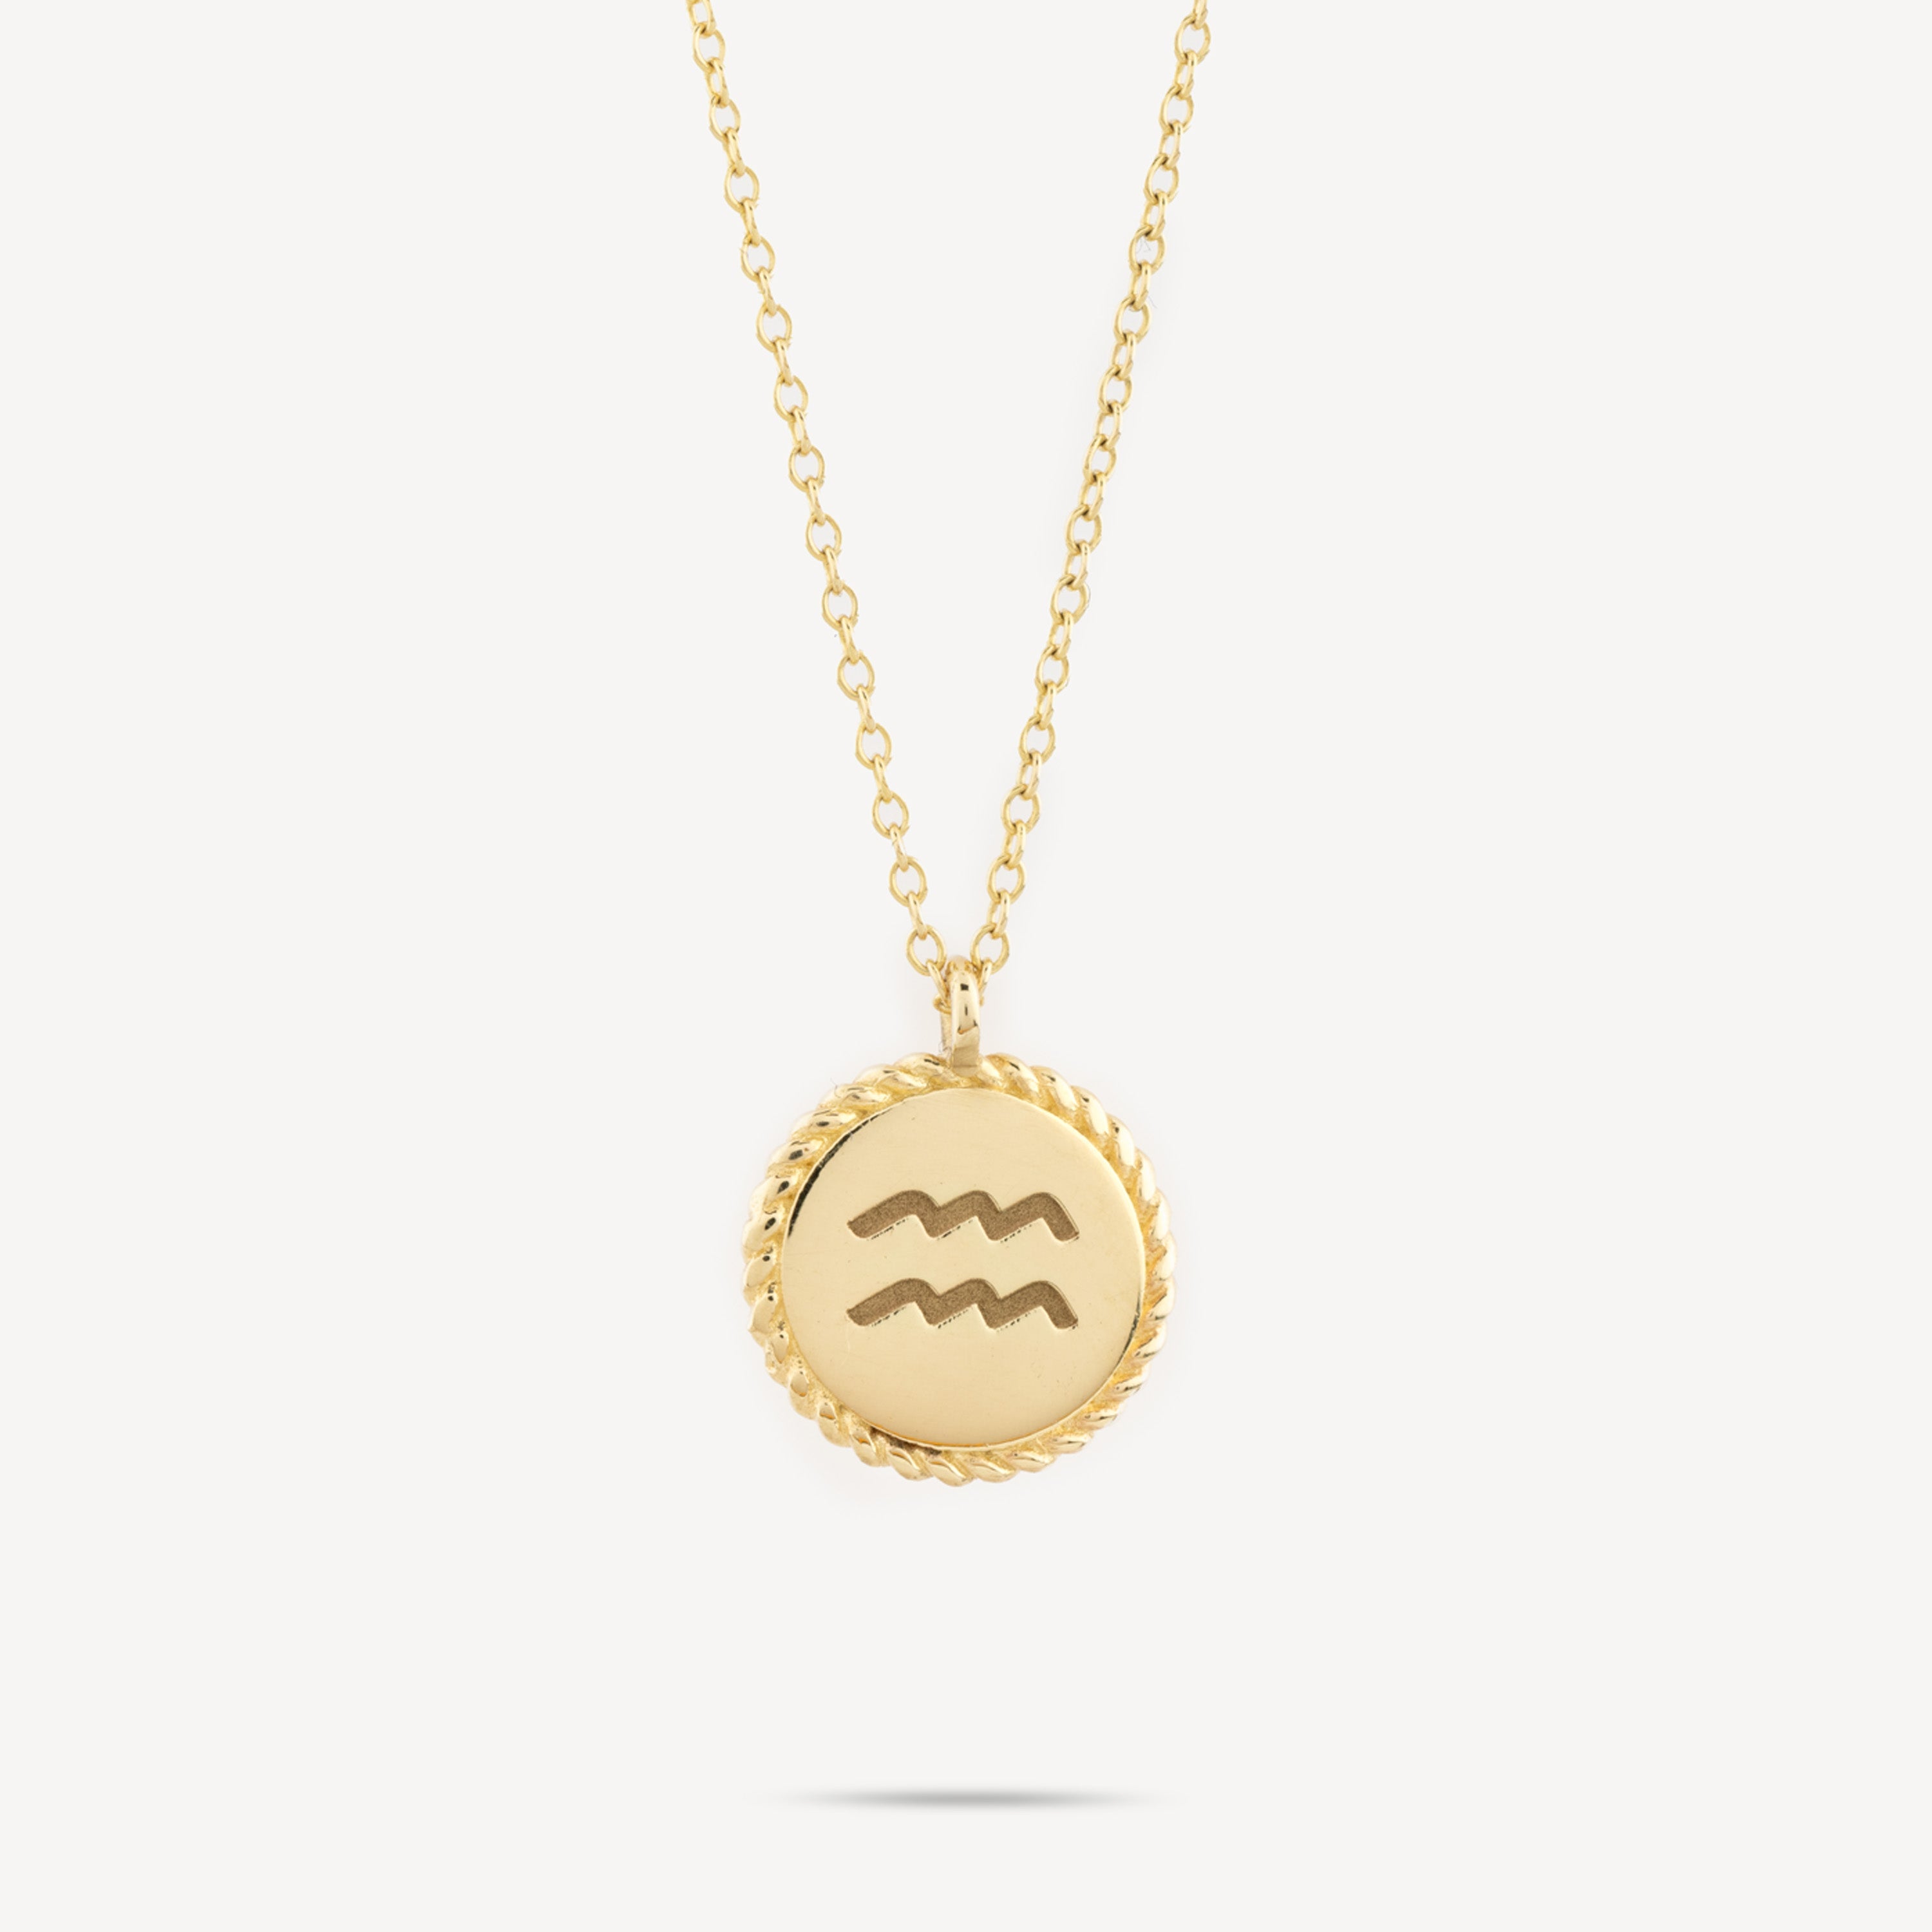 Aquarius Zodiac Medal Necklace